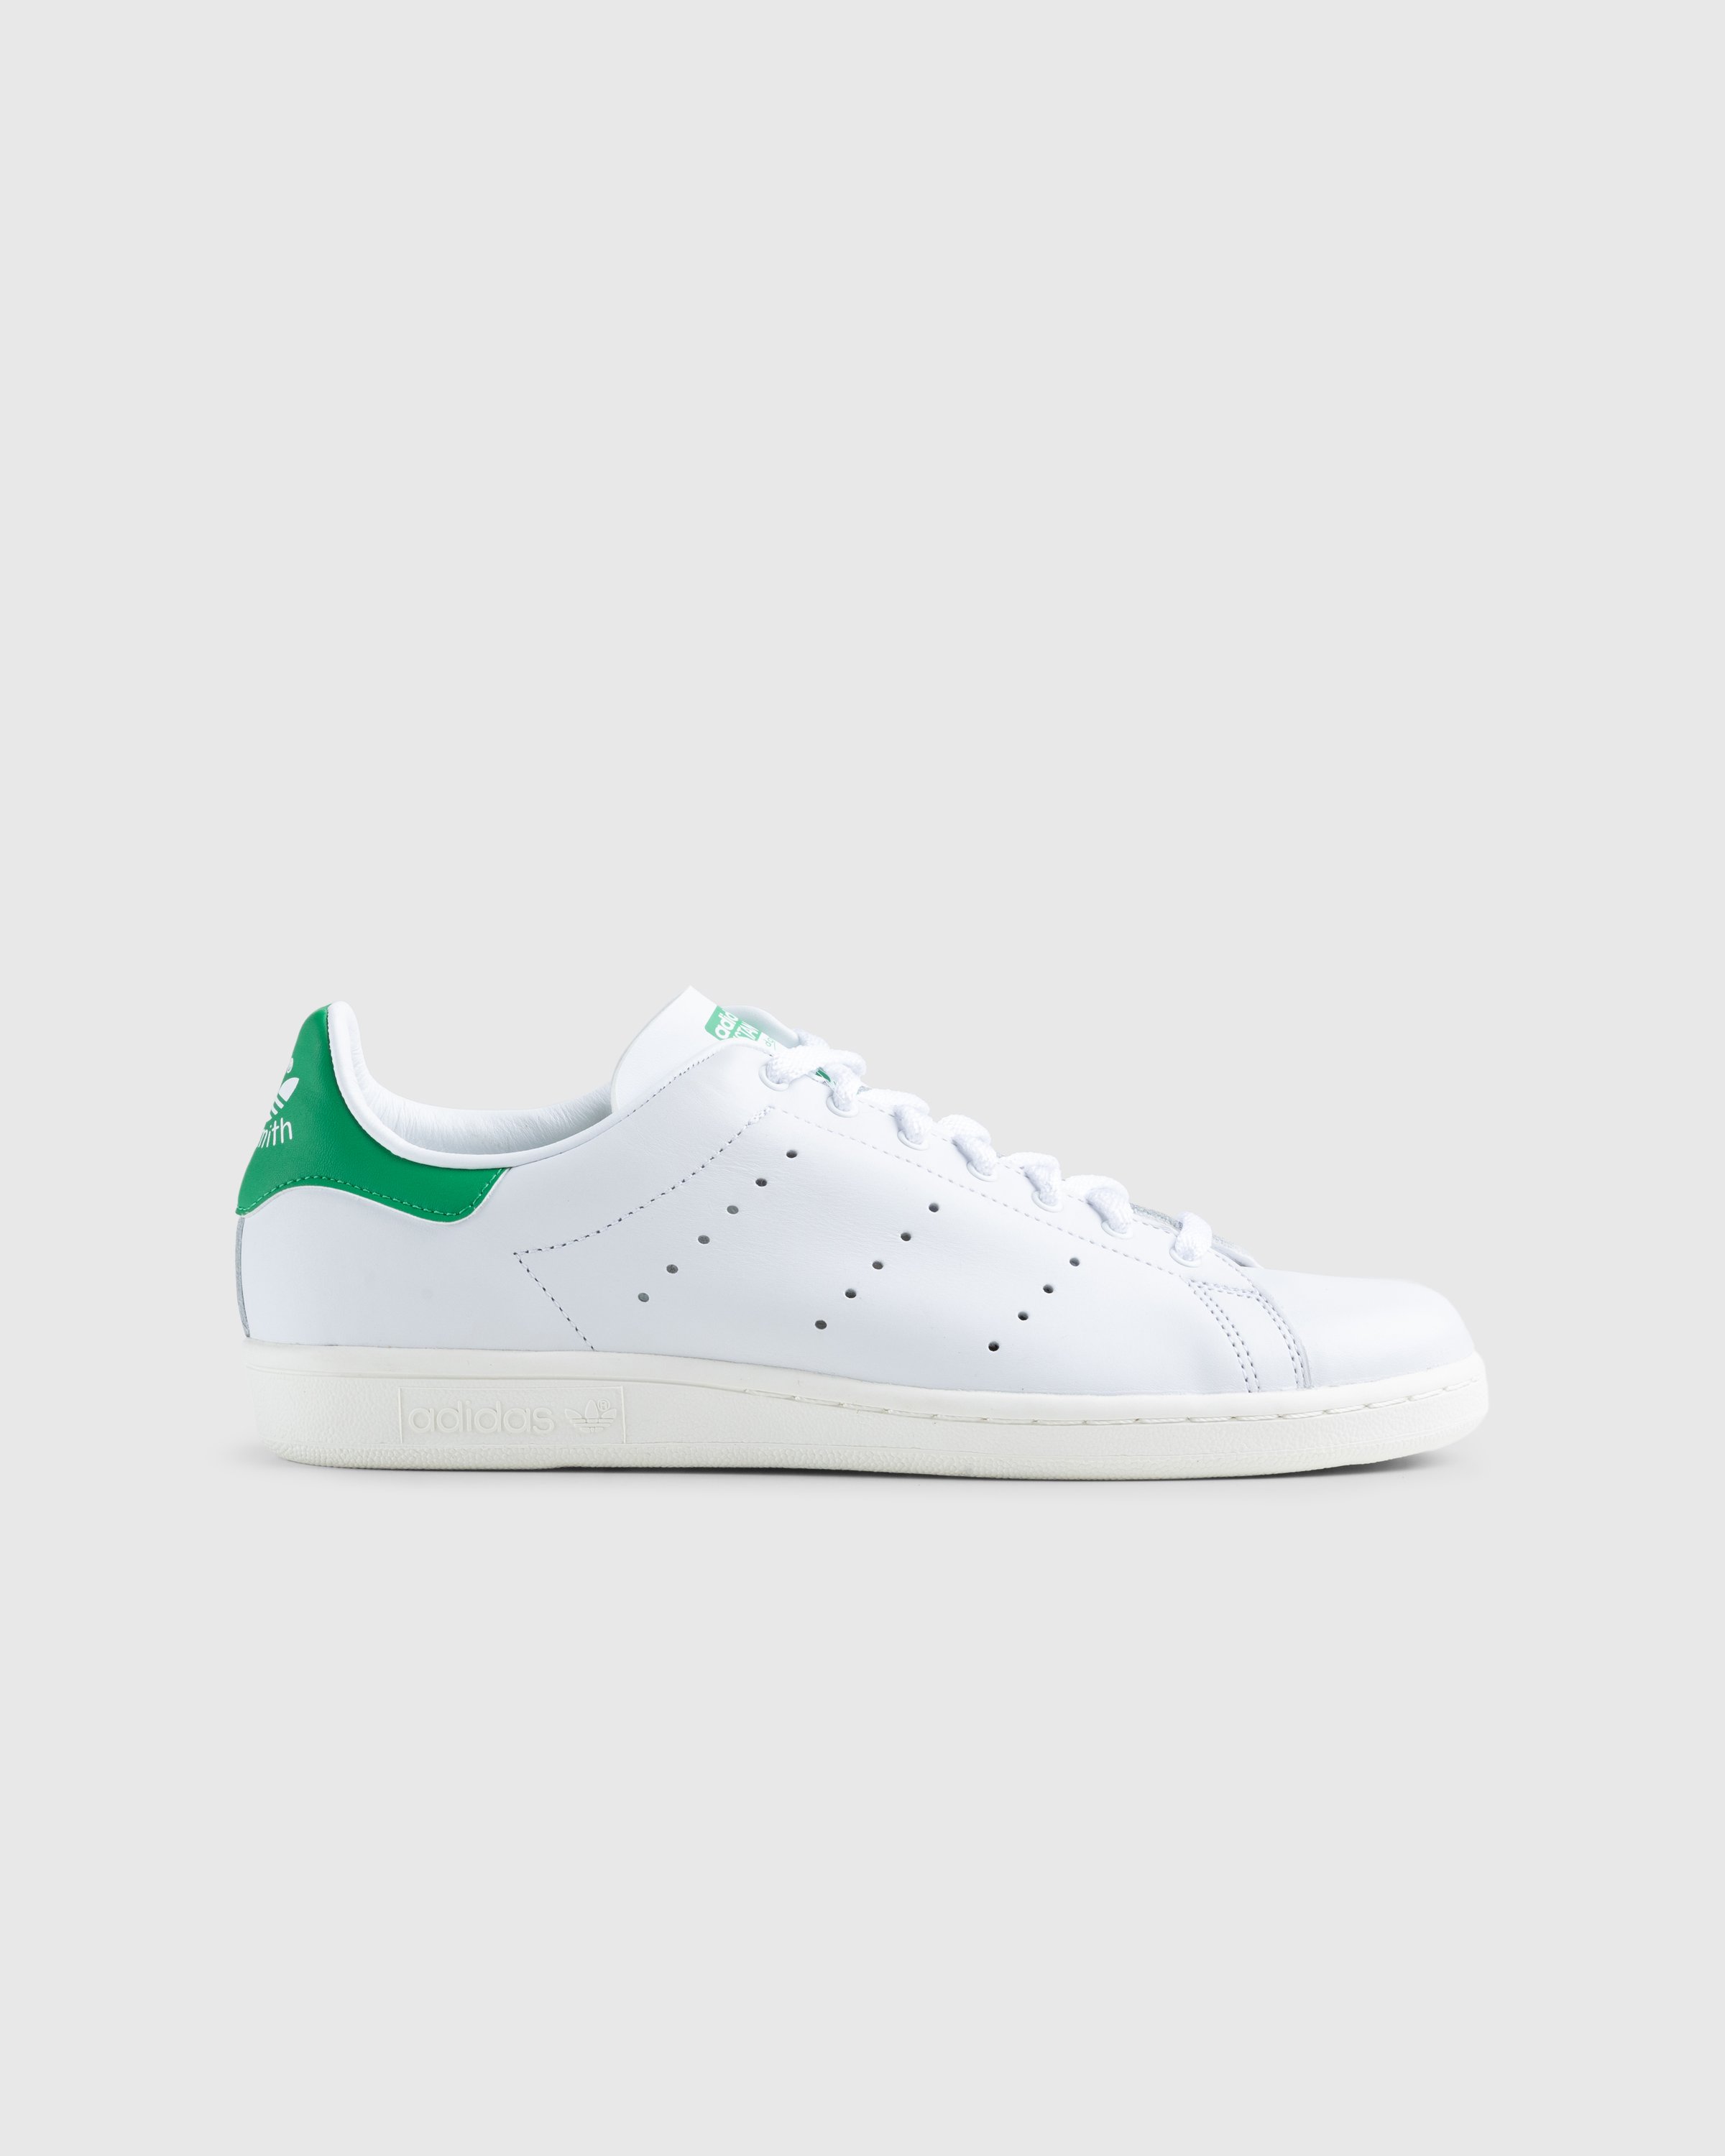 Adidas - Stan Smith 80s - Footwear - White - Image 1